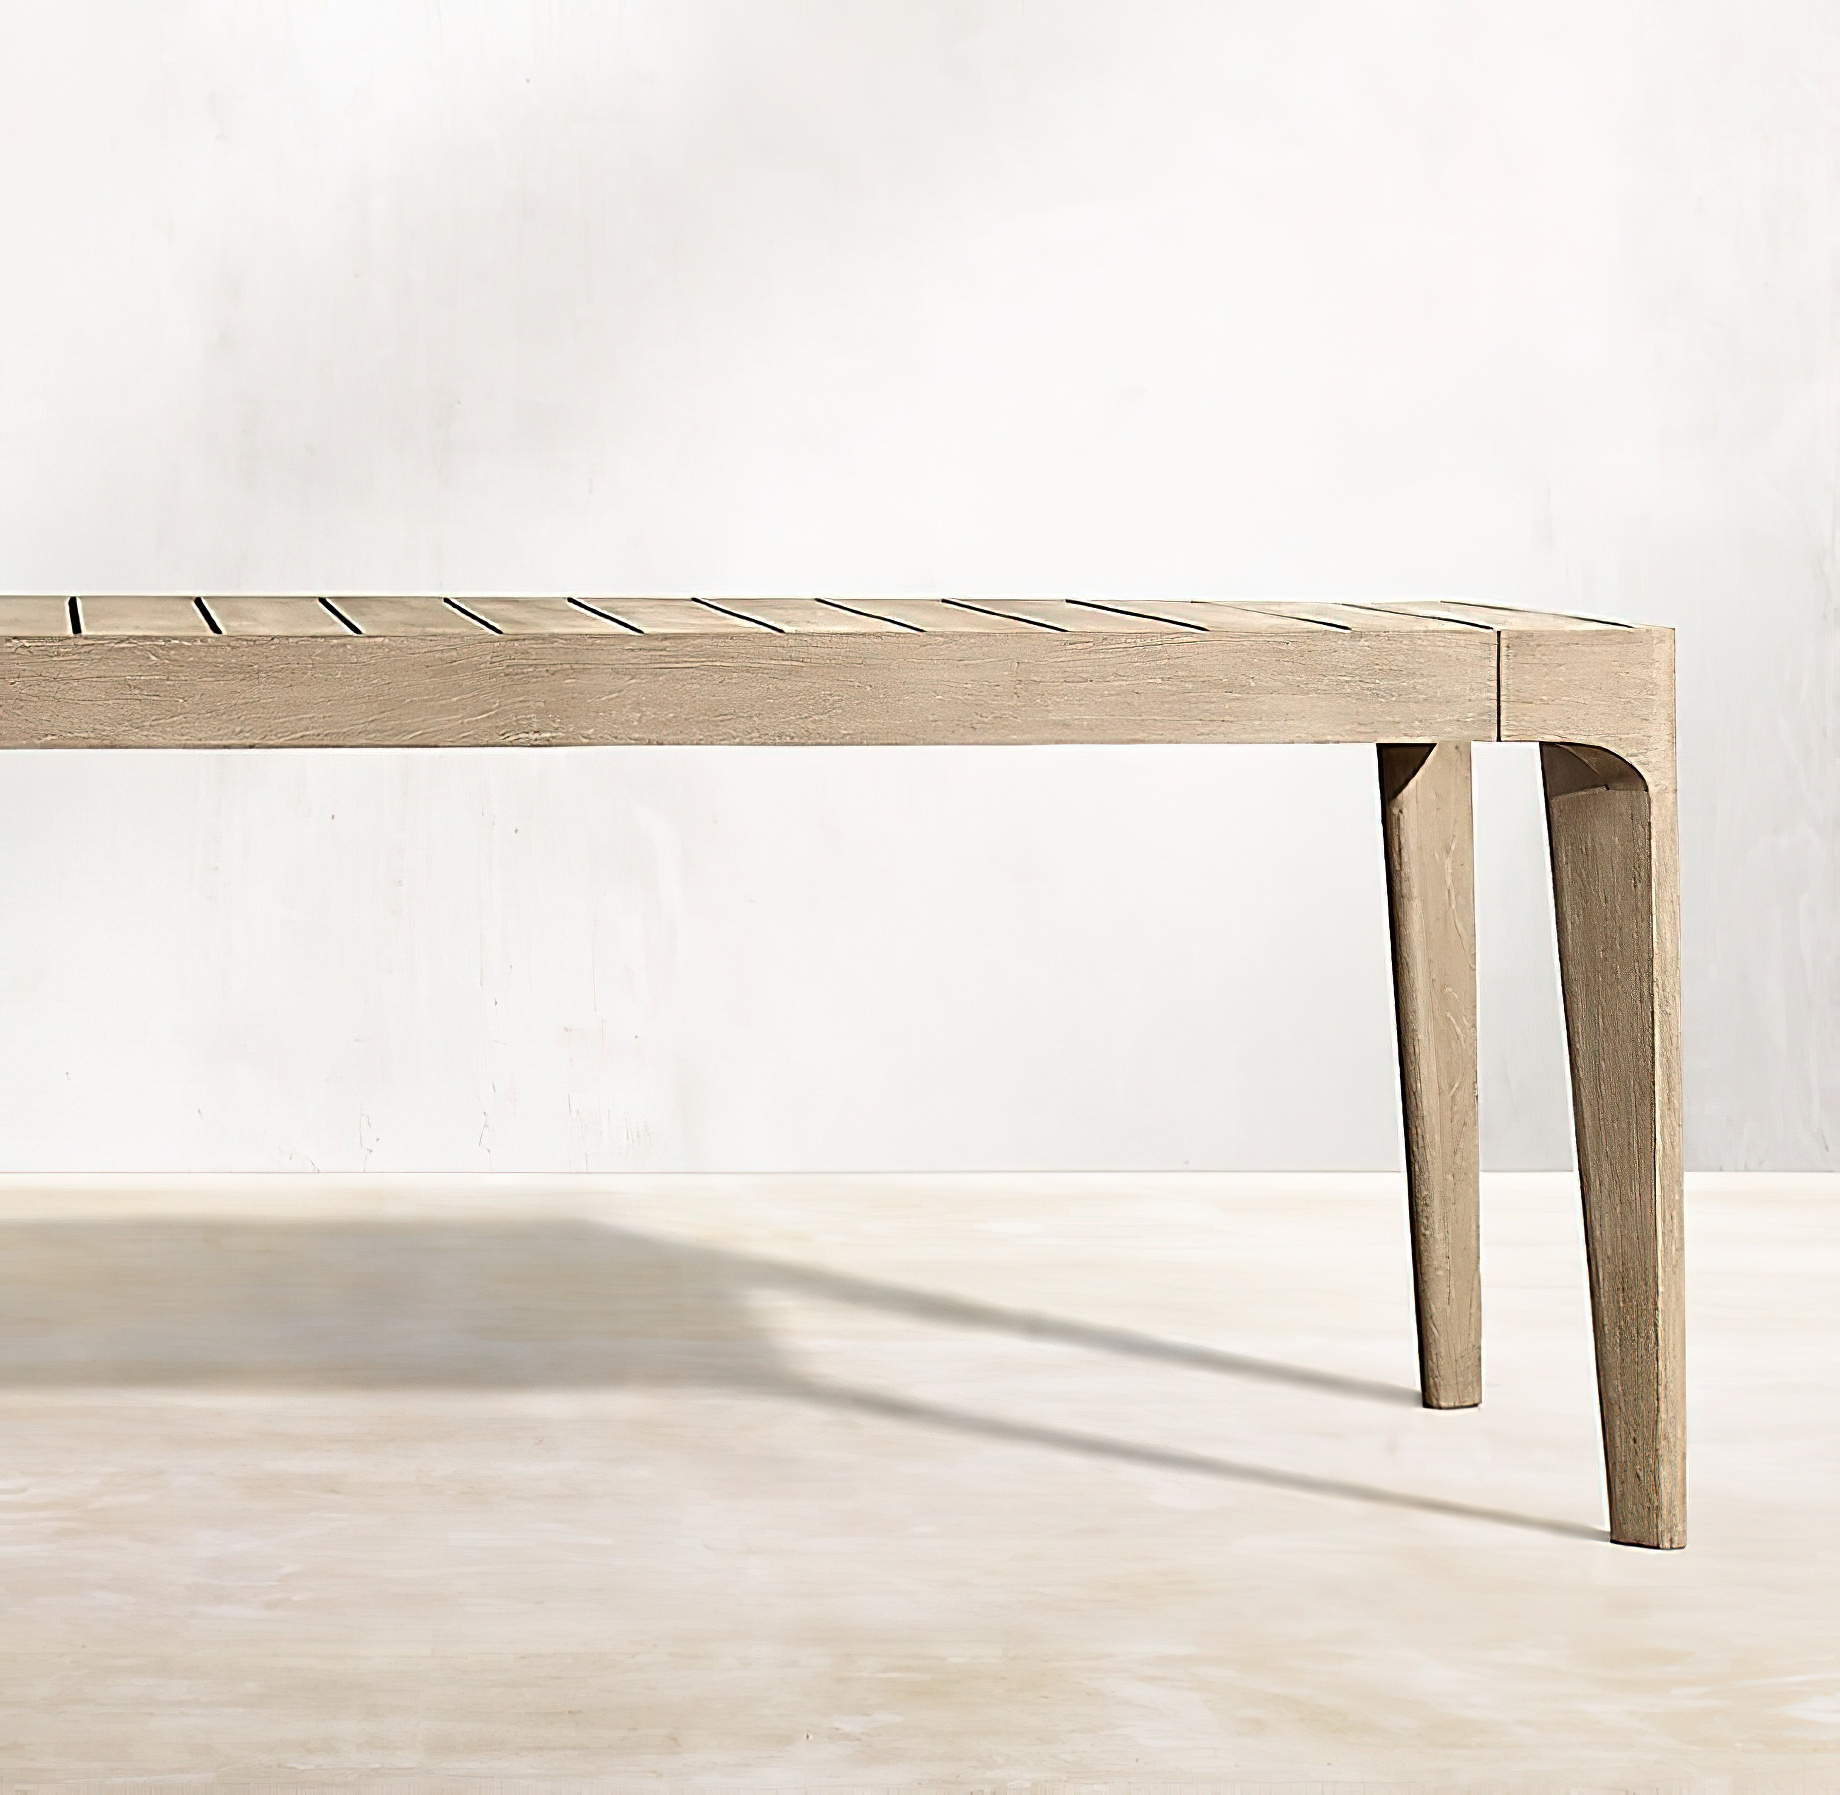 Malta Teak Collection Outdoor Furniture Design for RH – Ramon Esteve – Malta Teak Dining Table